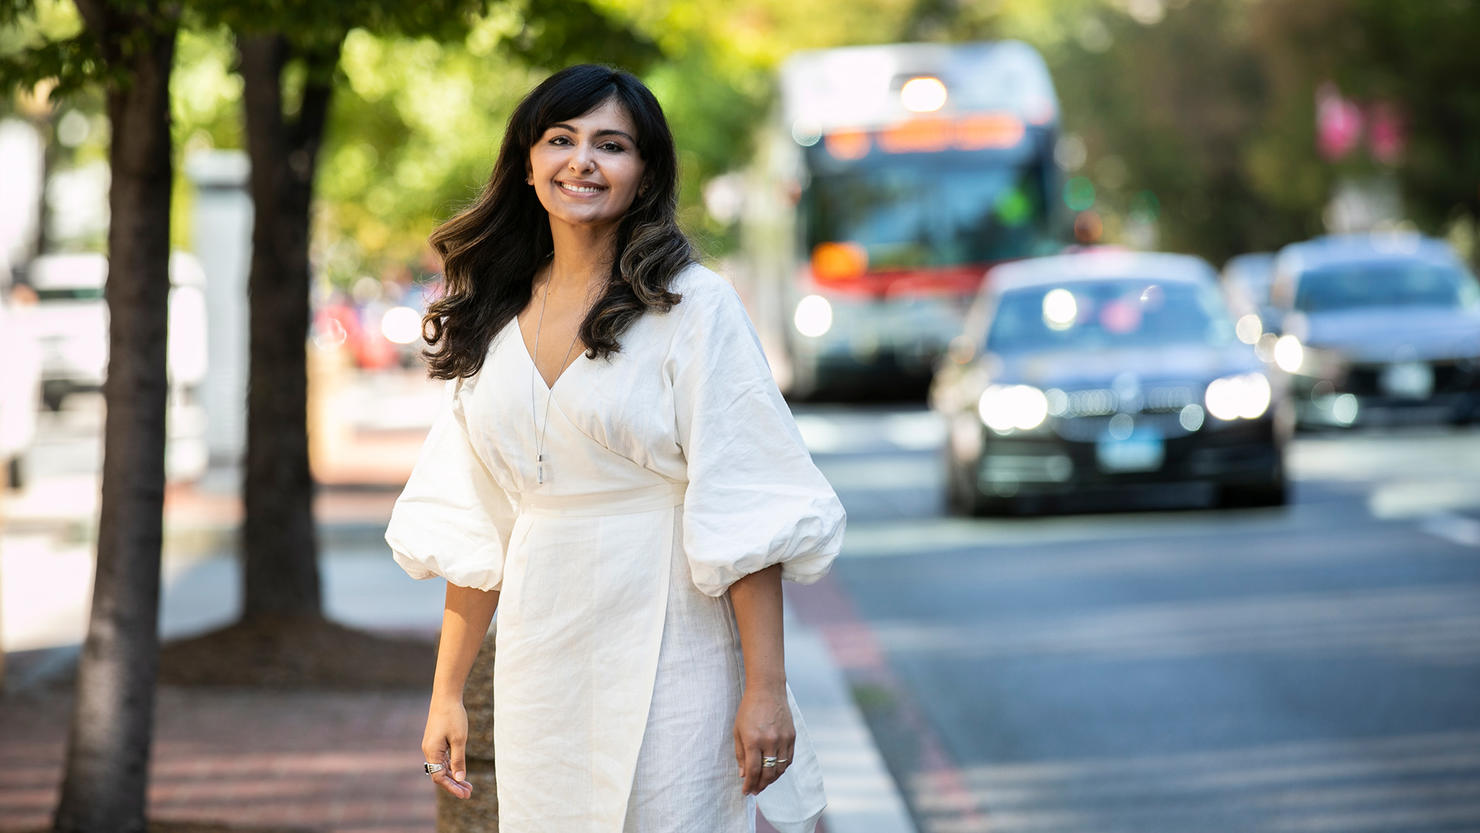 Dilafruz Khonikboyeva standing outside on the sidewalk wearing a white dress. She is smiling at the camera.